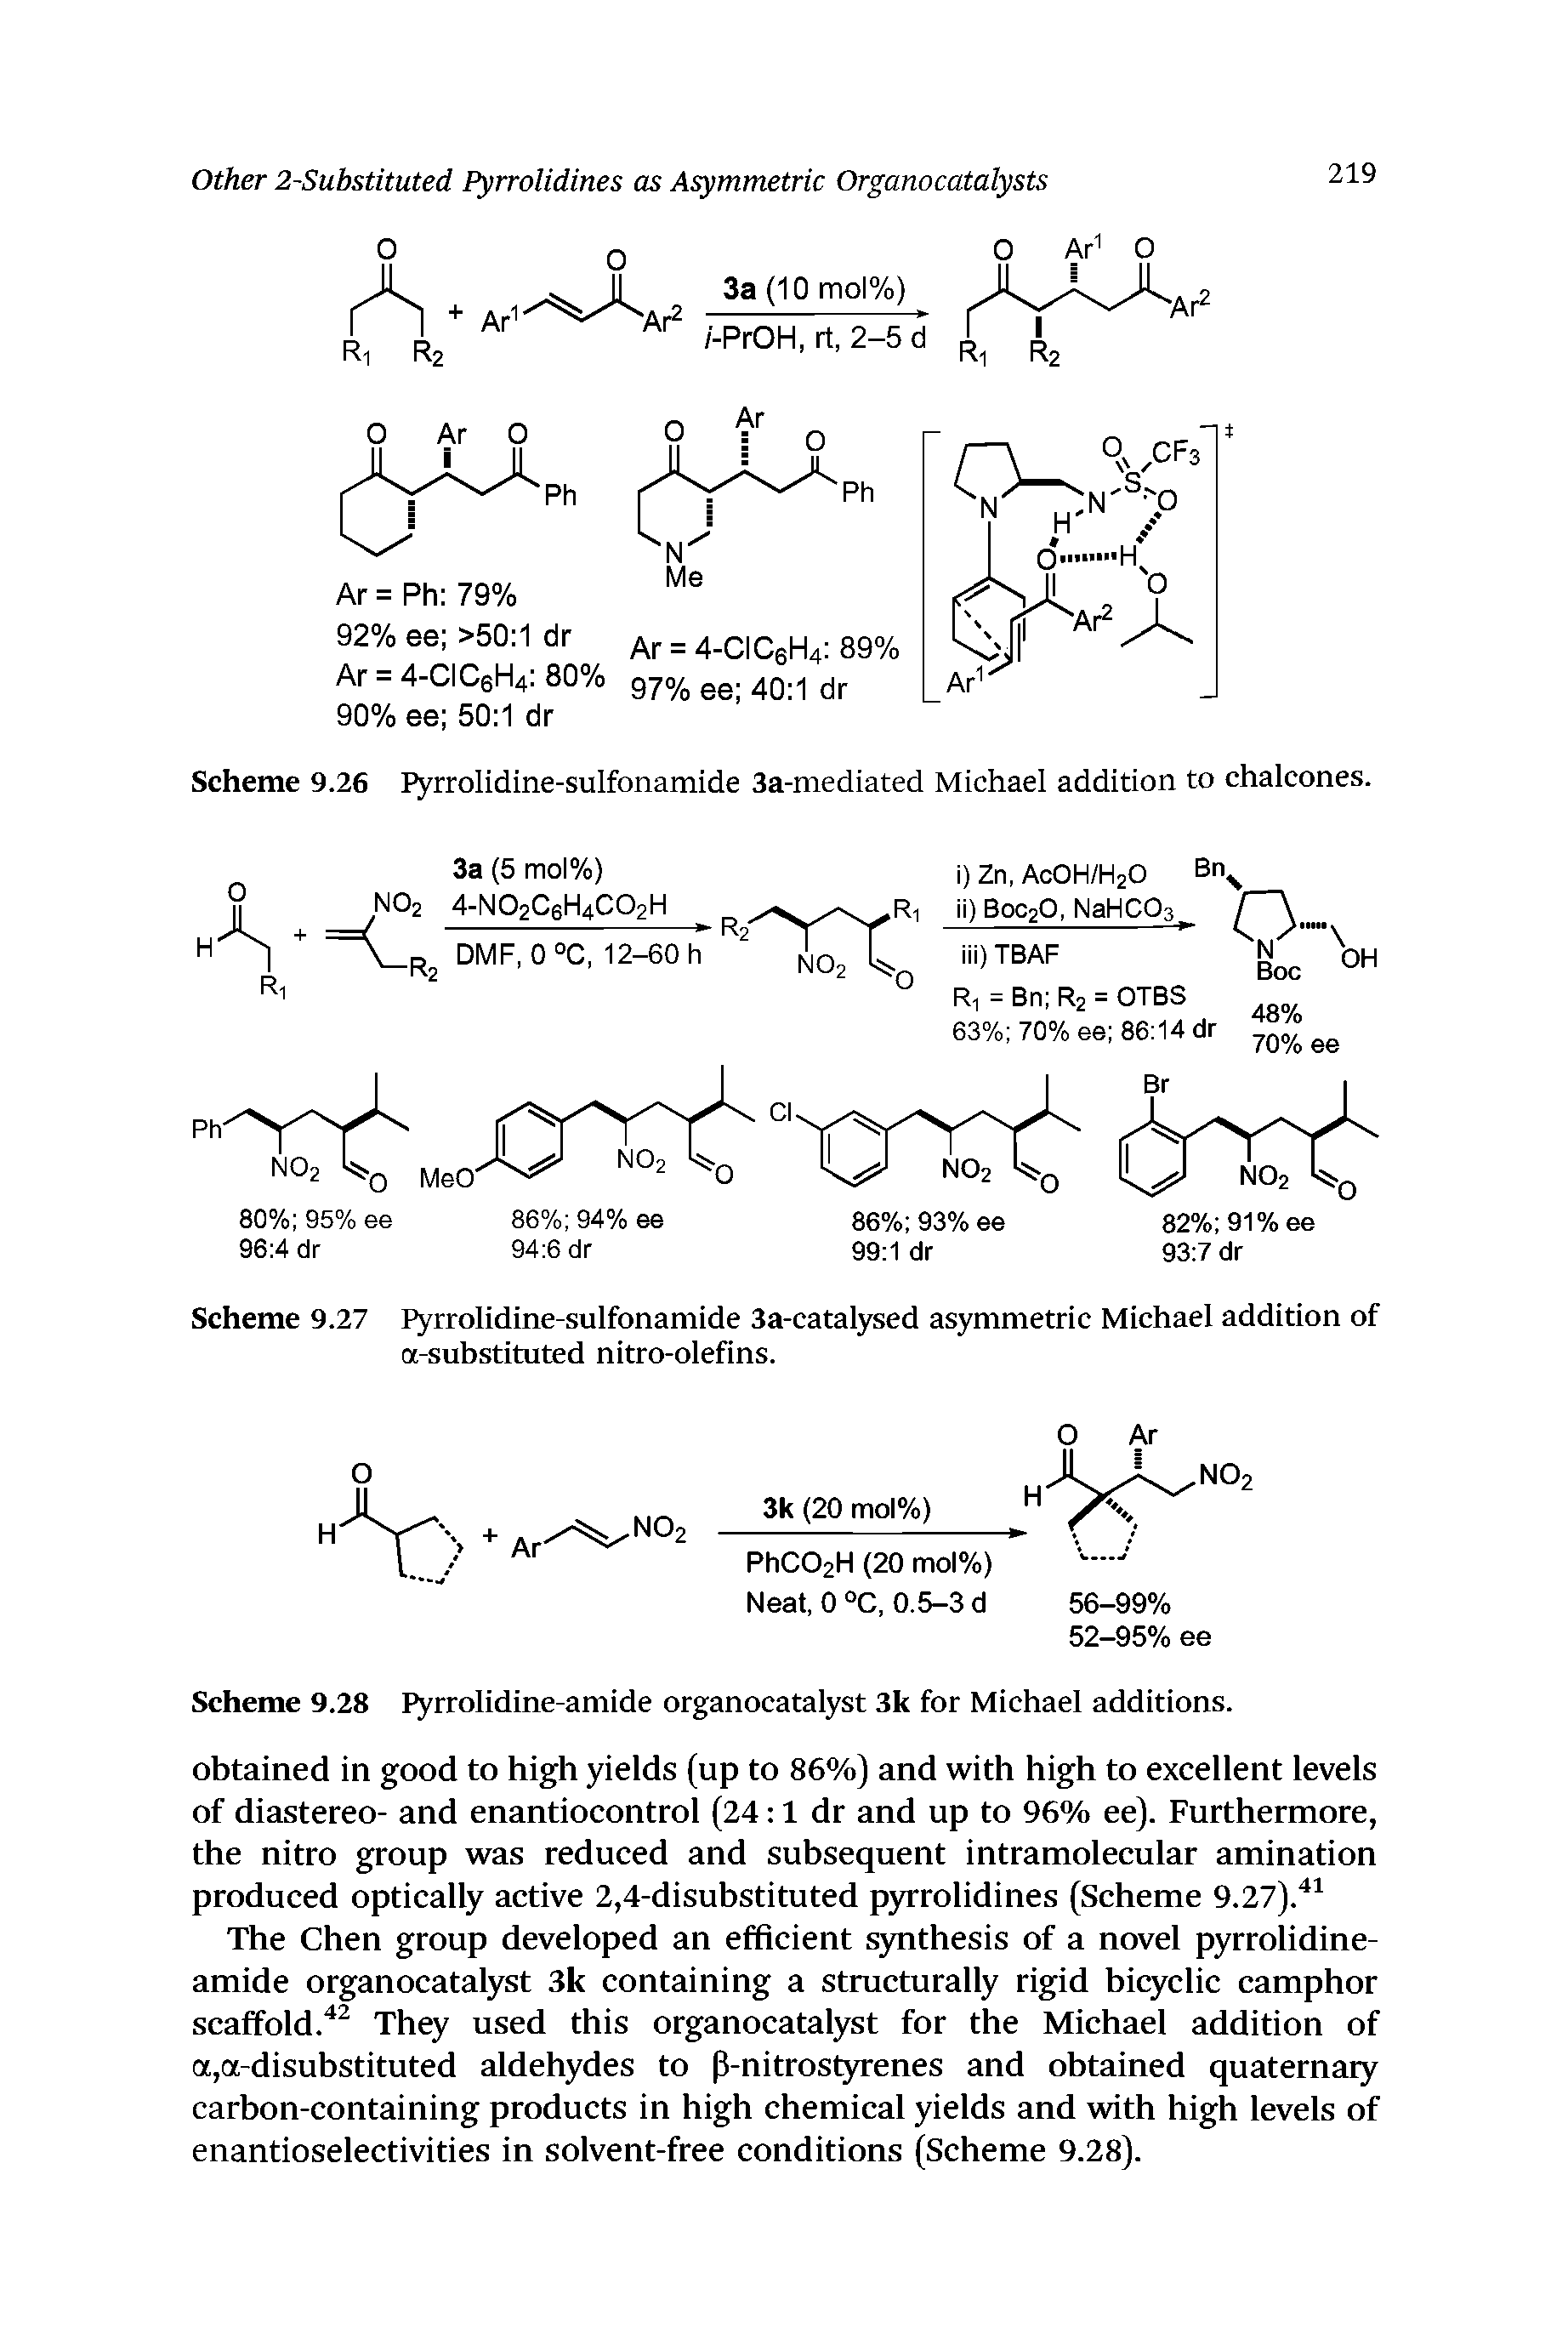 Scheme 9.27 Pyrrolidine-sulfonamide 3a-catalysed asymmetric Michael addition of a-substituted nitro-olefins.